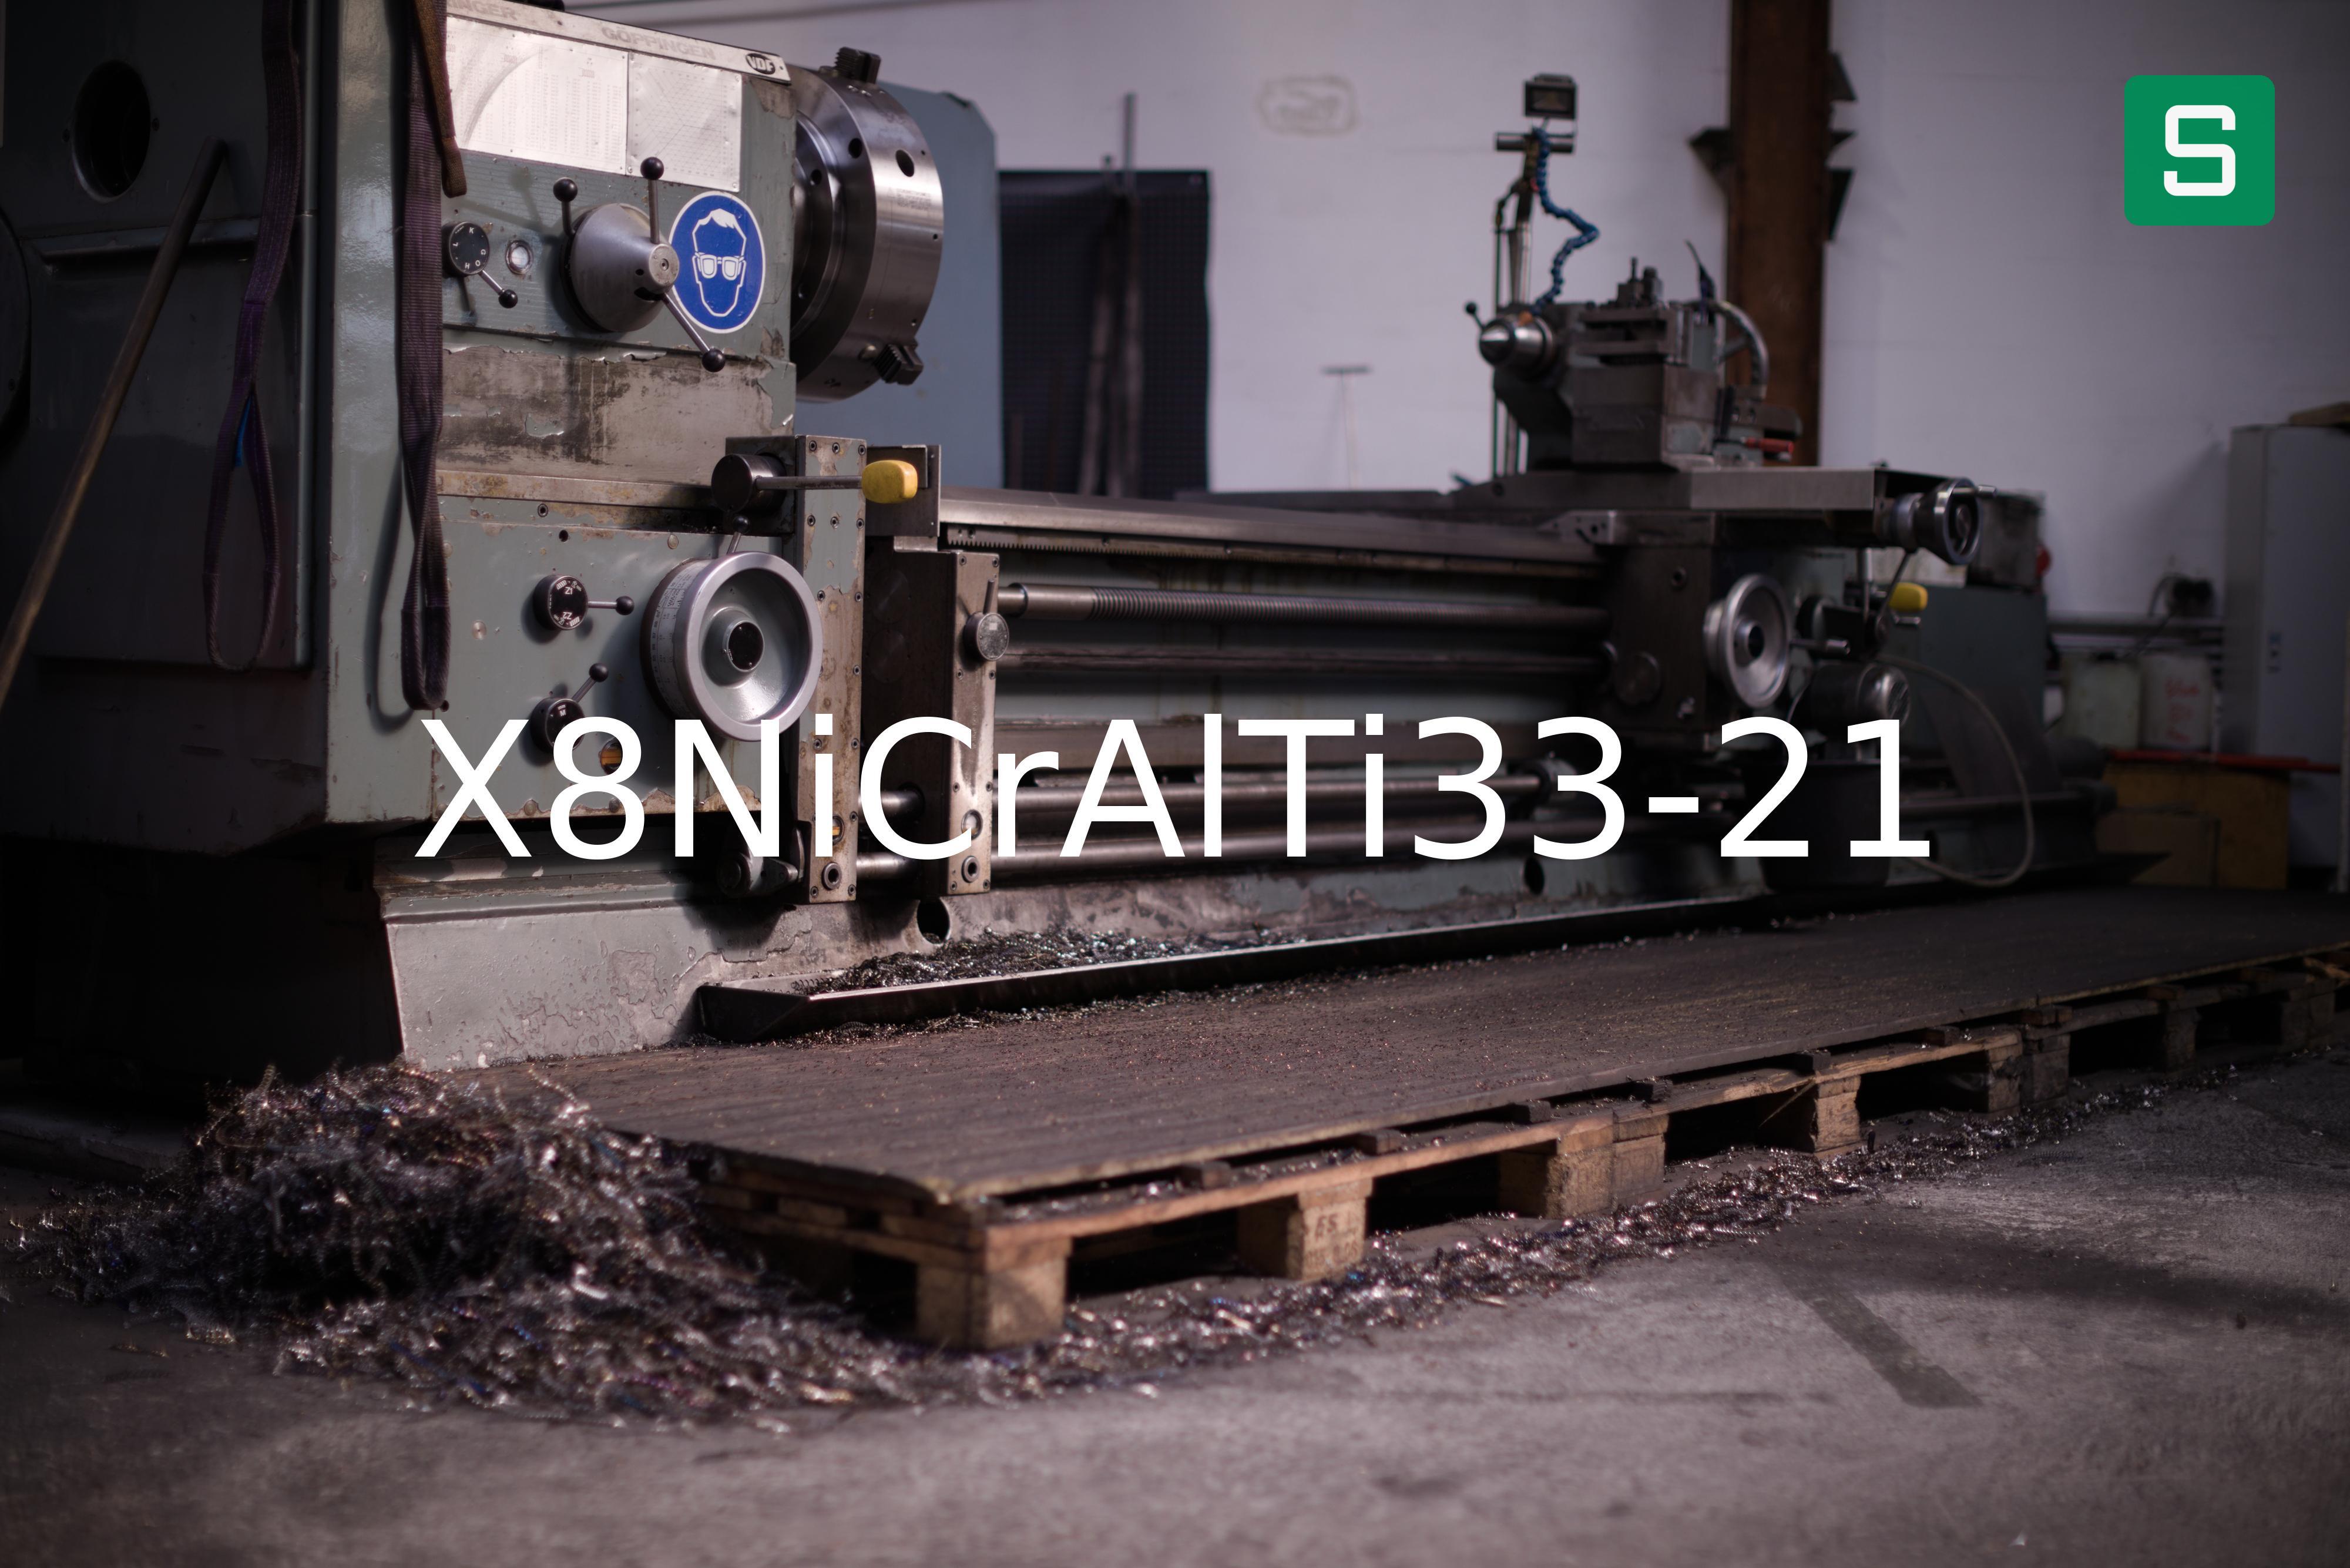 Stahlwerkstoff: X8NiCrAlTi33-21